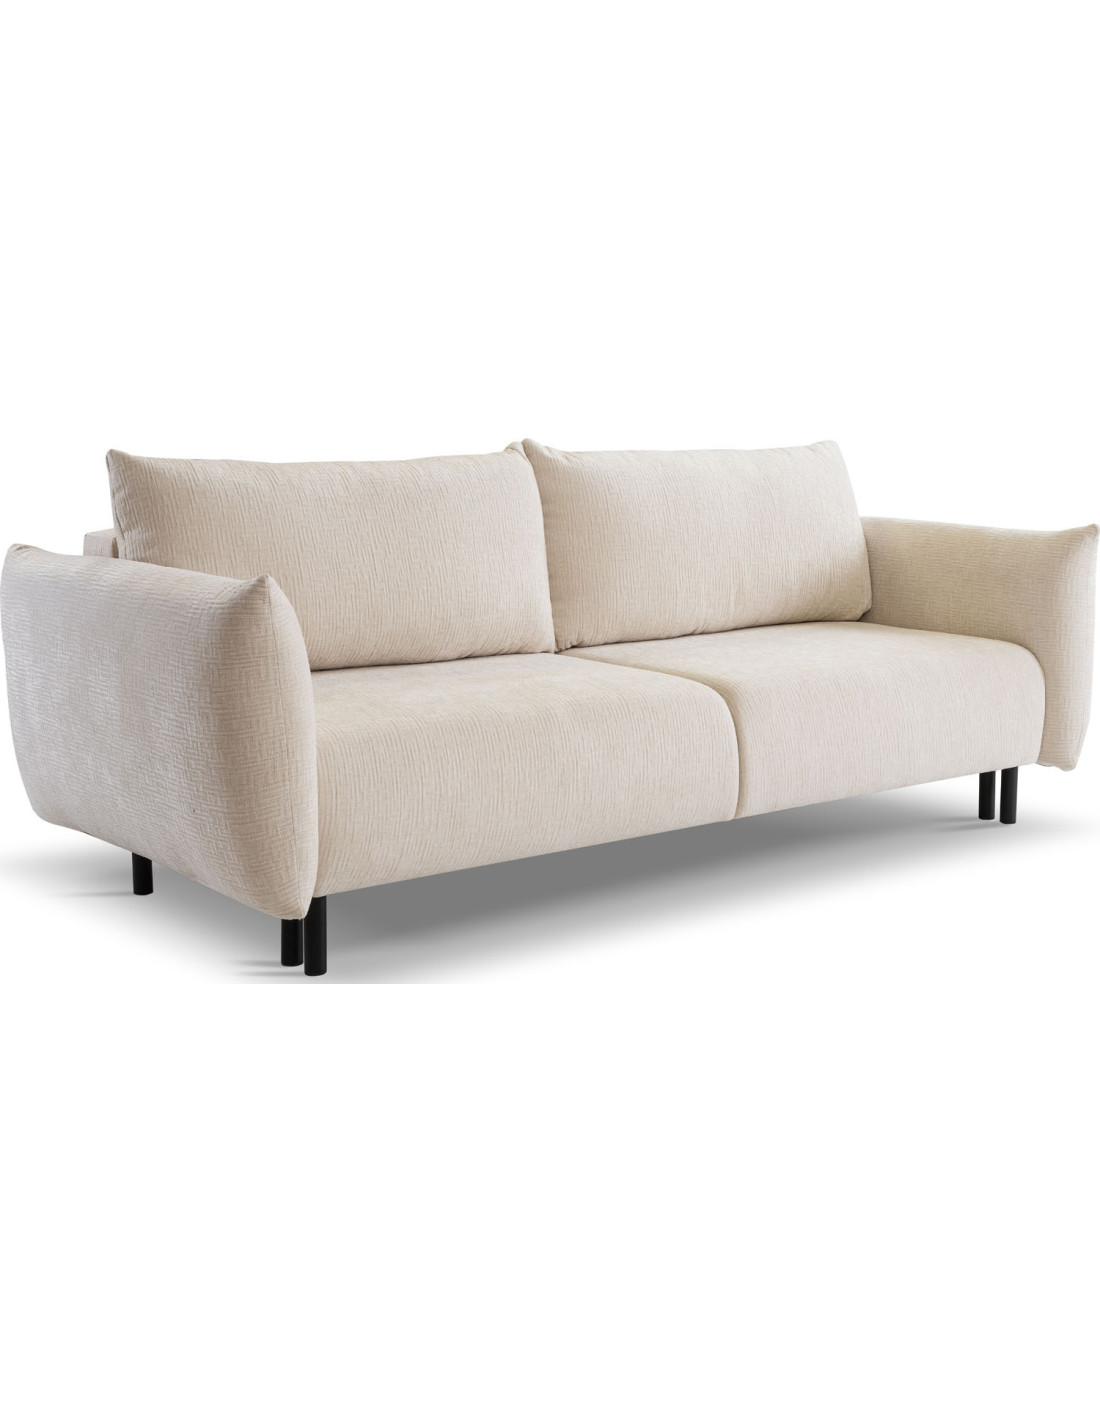 Sitzer Sofa Bett Couch